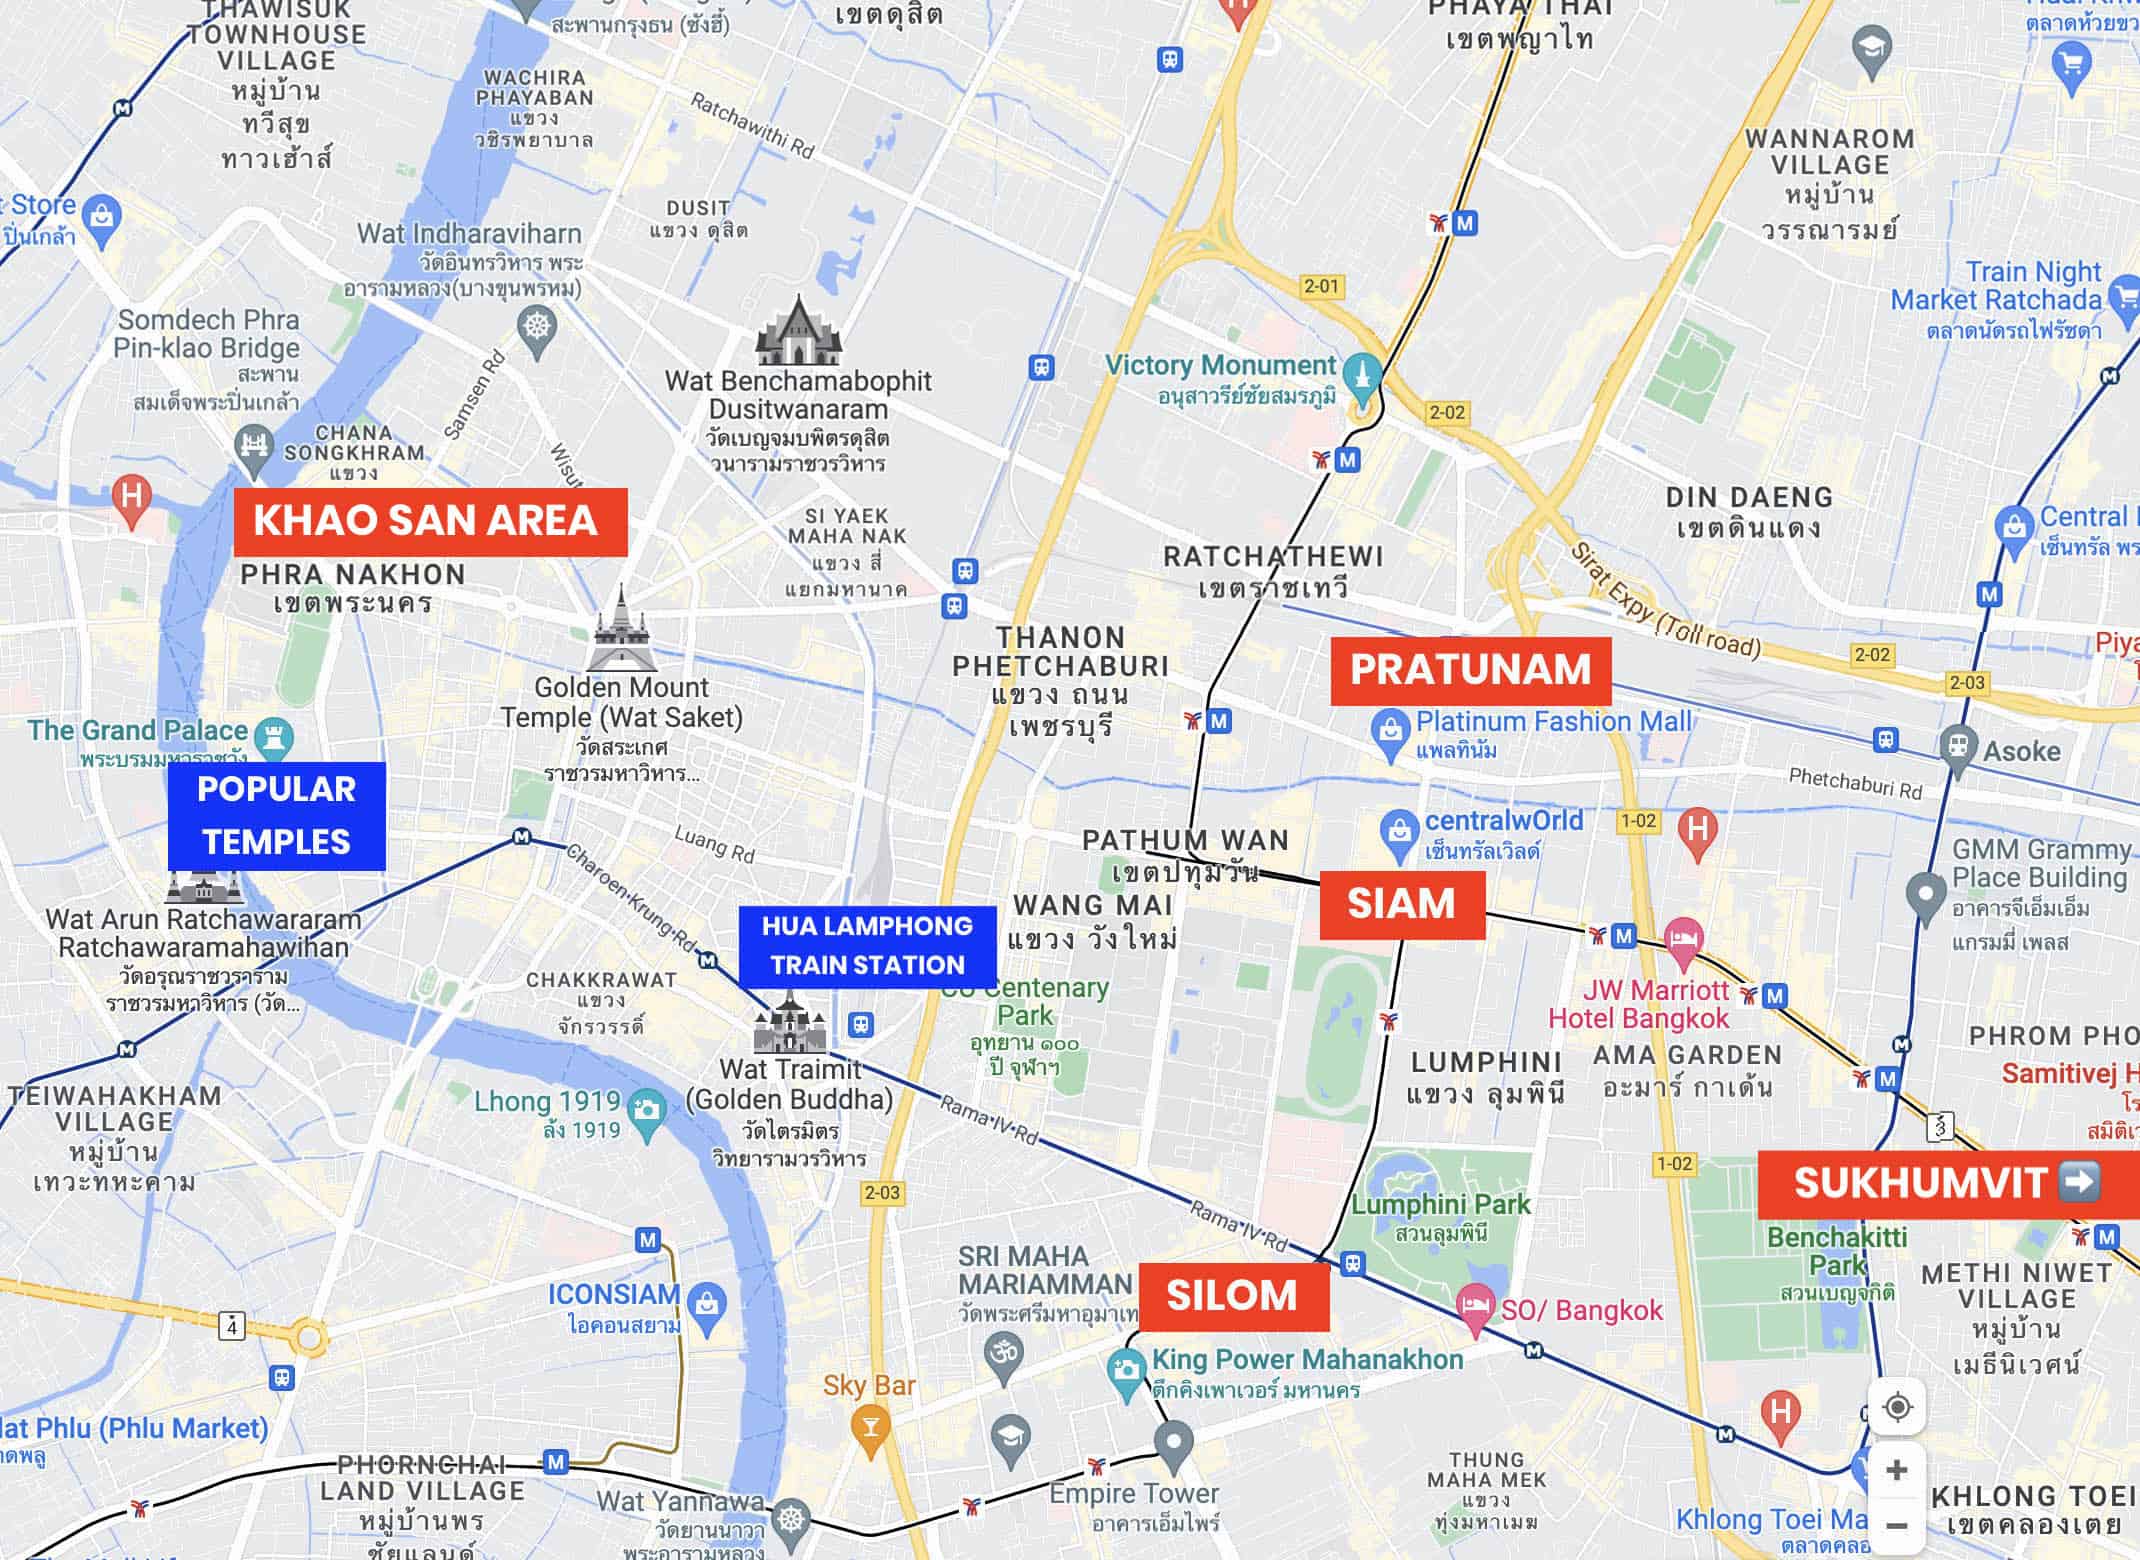 Visiting Bangkok: My Suggested 3-5 Day Itinerary for 2023